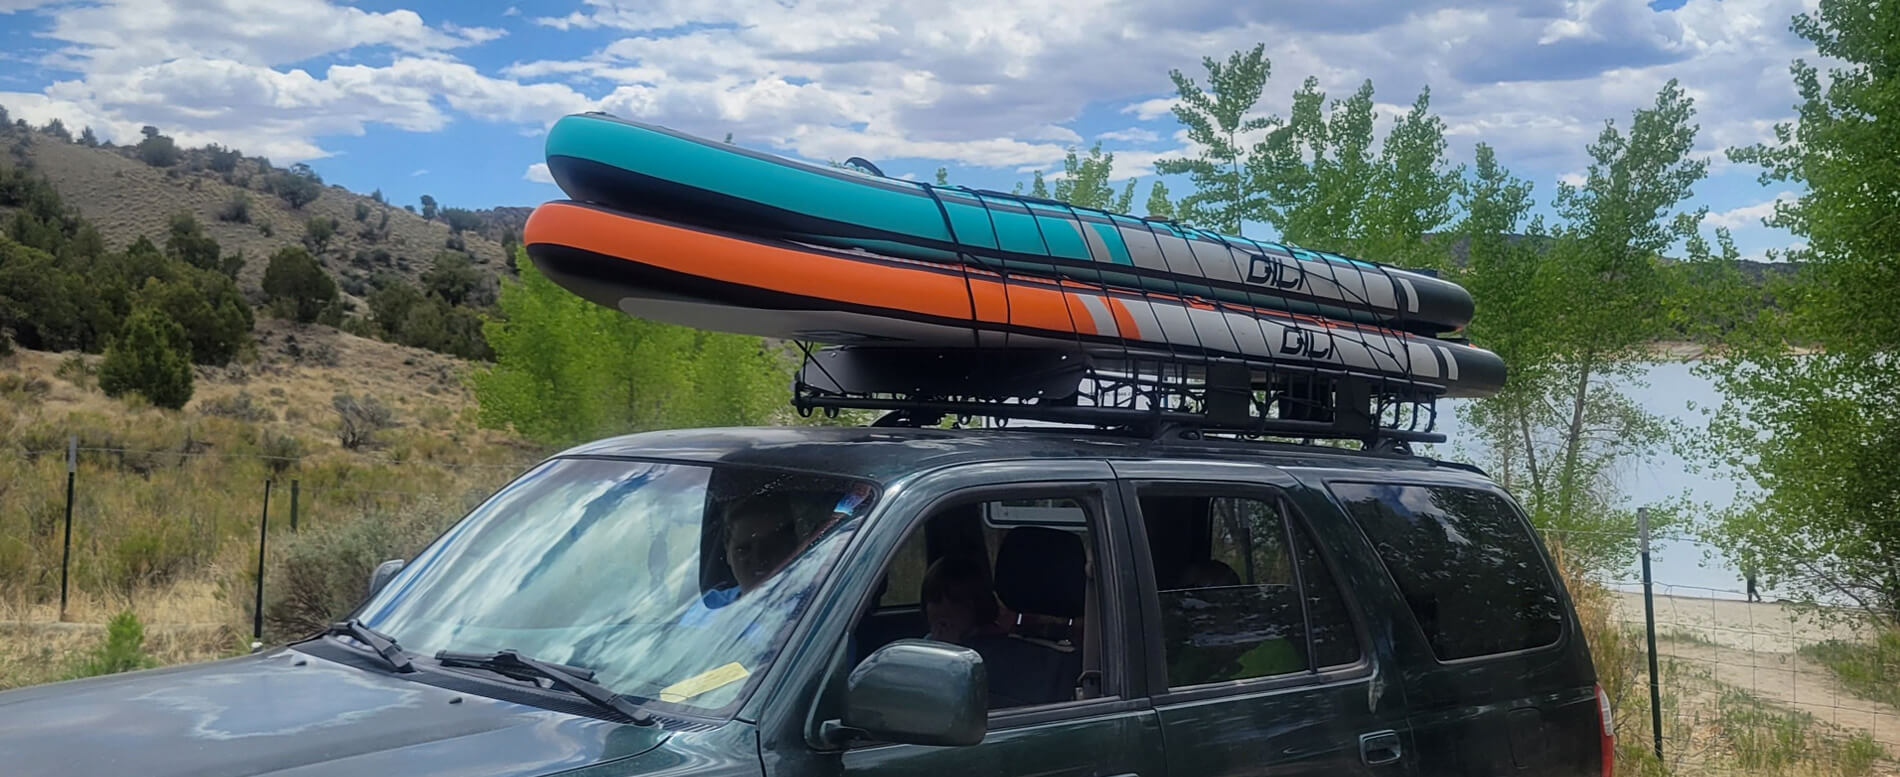 Double Kayak Roof Rack  Holds 2 Kayaks – StoreYourBoard